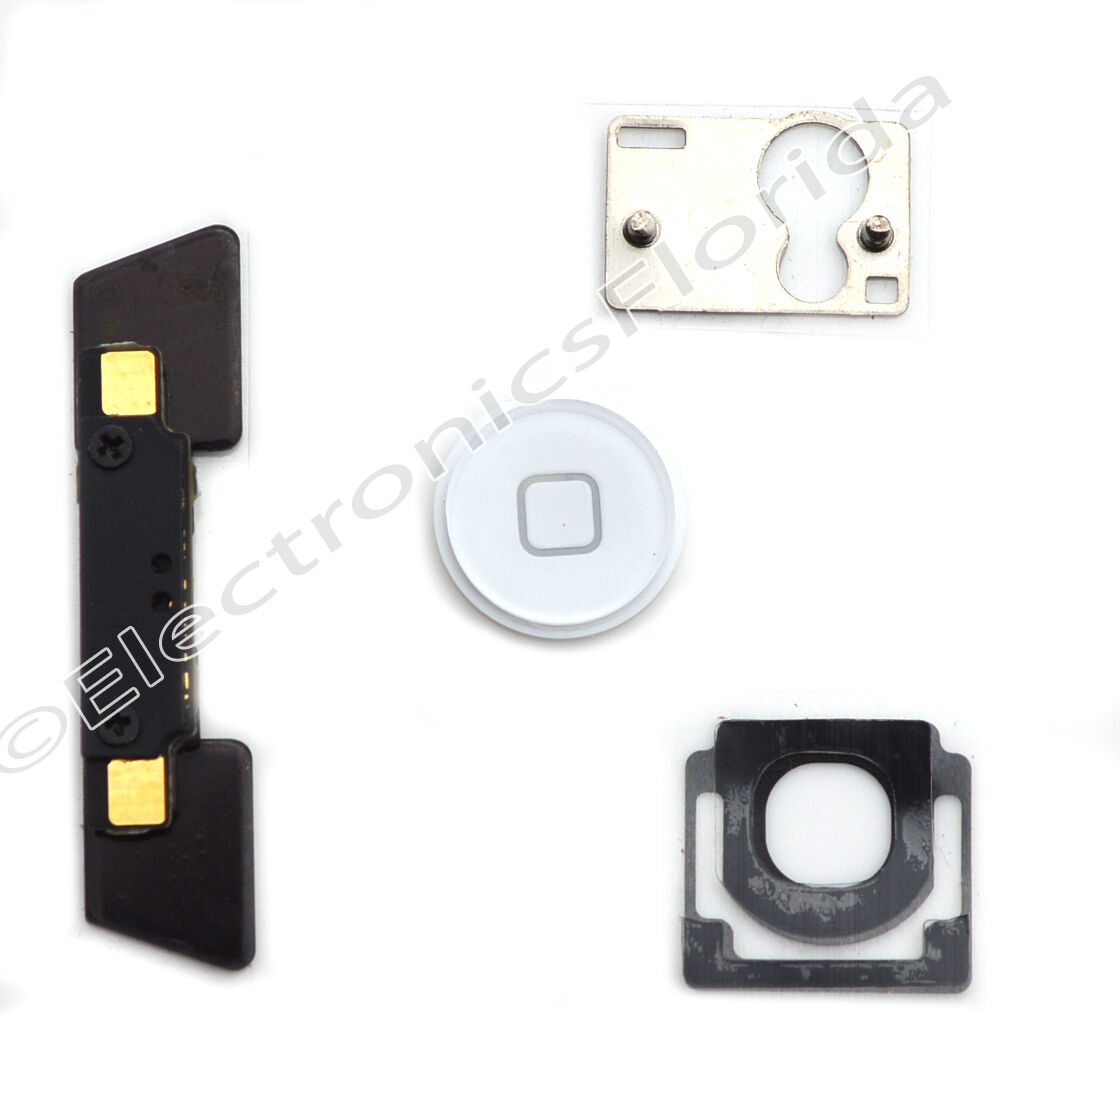 Home Button + Home Button Bracket Holder Set + Camera Holder for iPad 2 b368